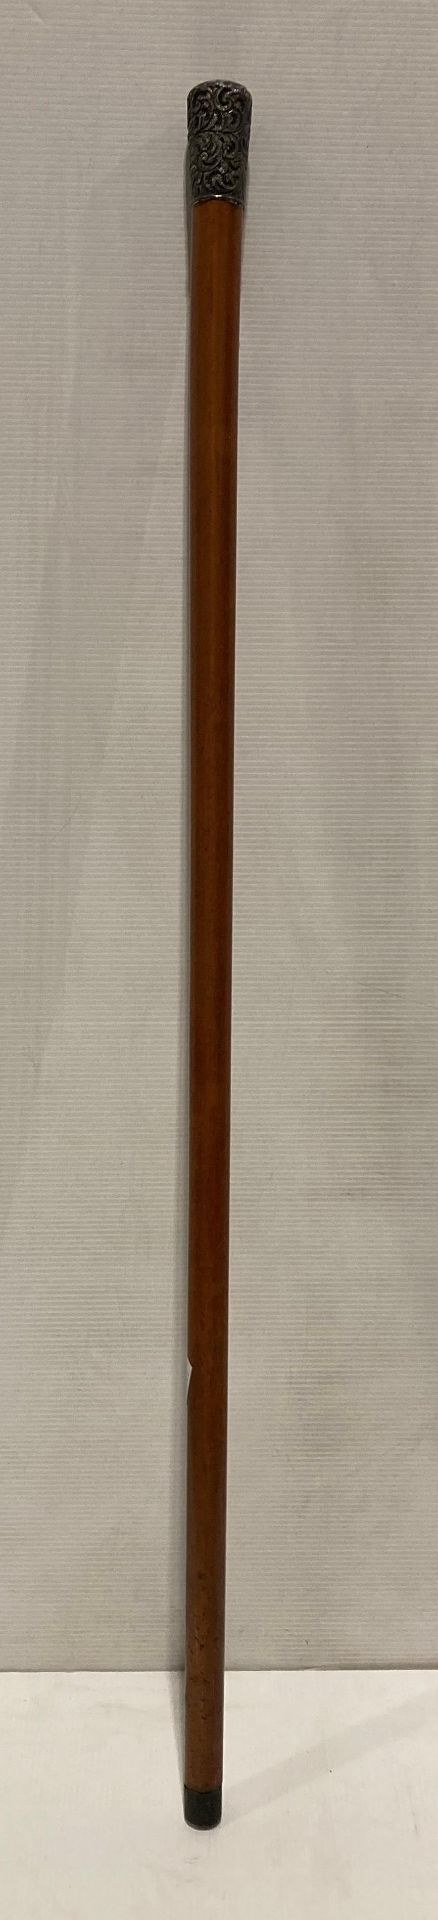 Silver mounted wooden walking stick (86.